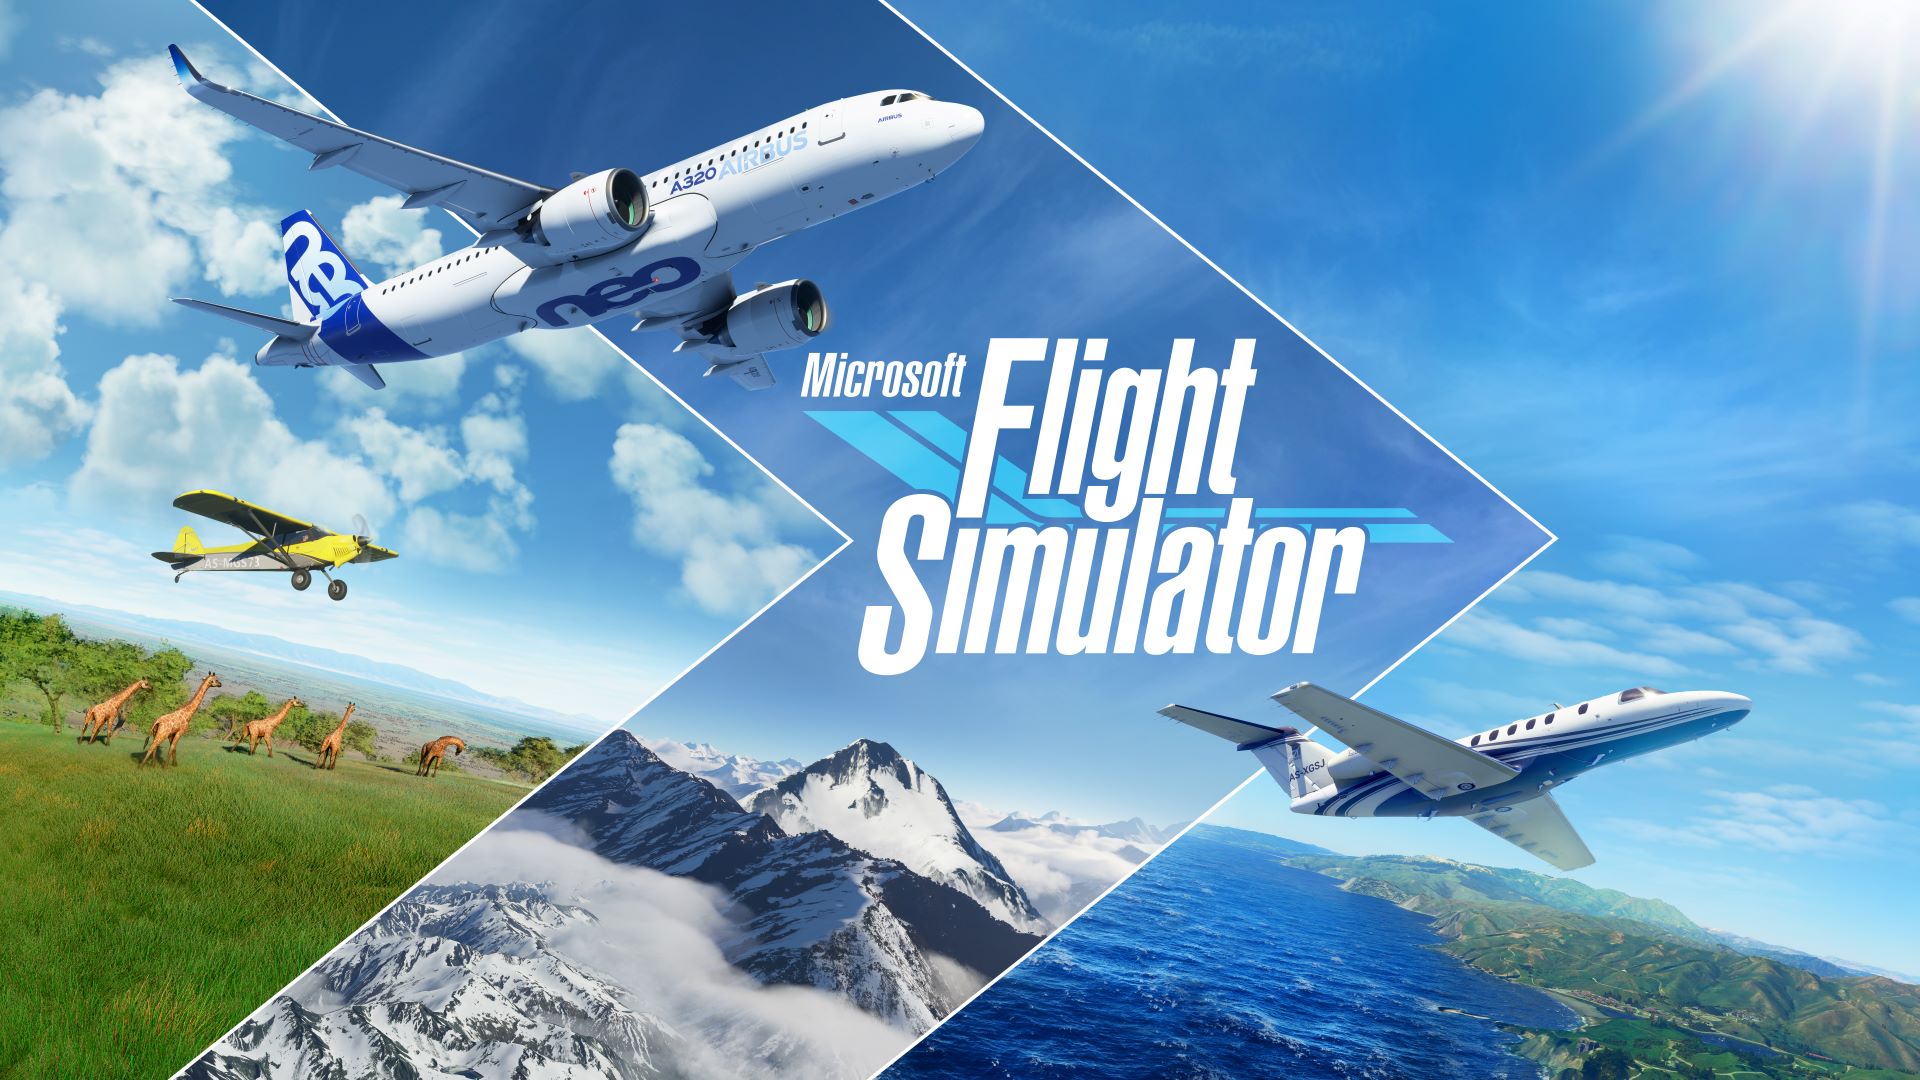 Microsoft Flight Simulator heavily CPUbound, struggles to push 60 FPS